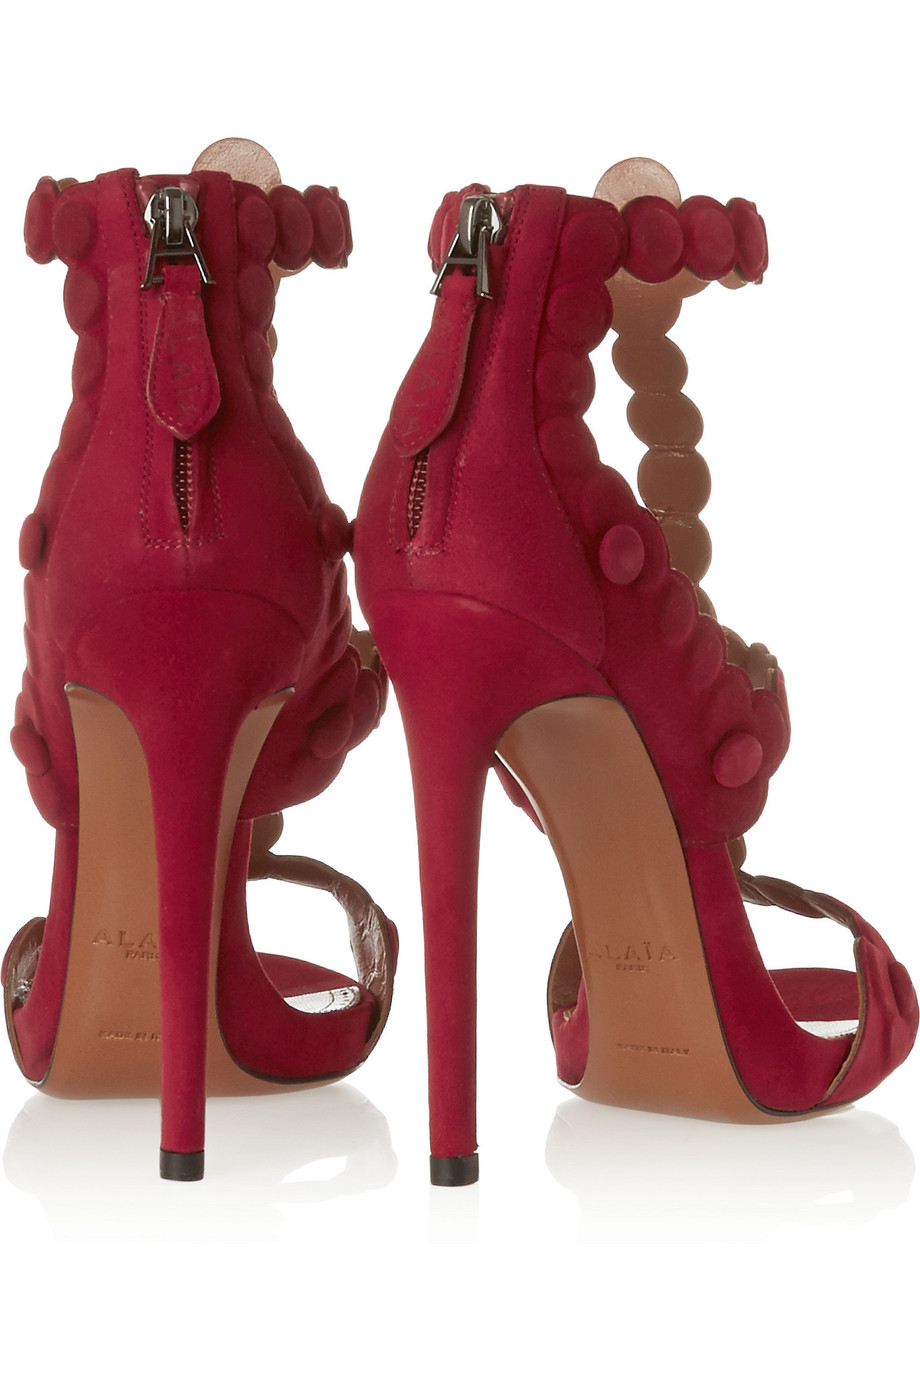 3-alaia-laser-cut-red-sandals